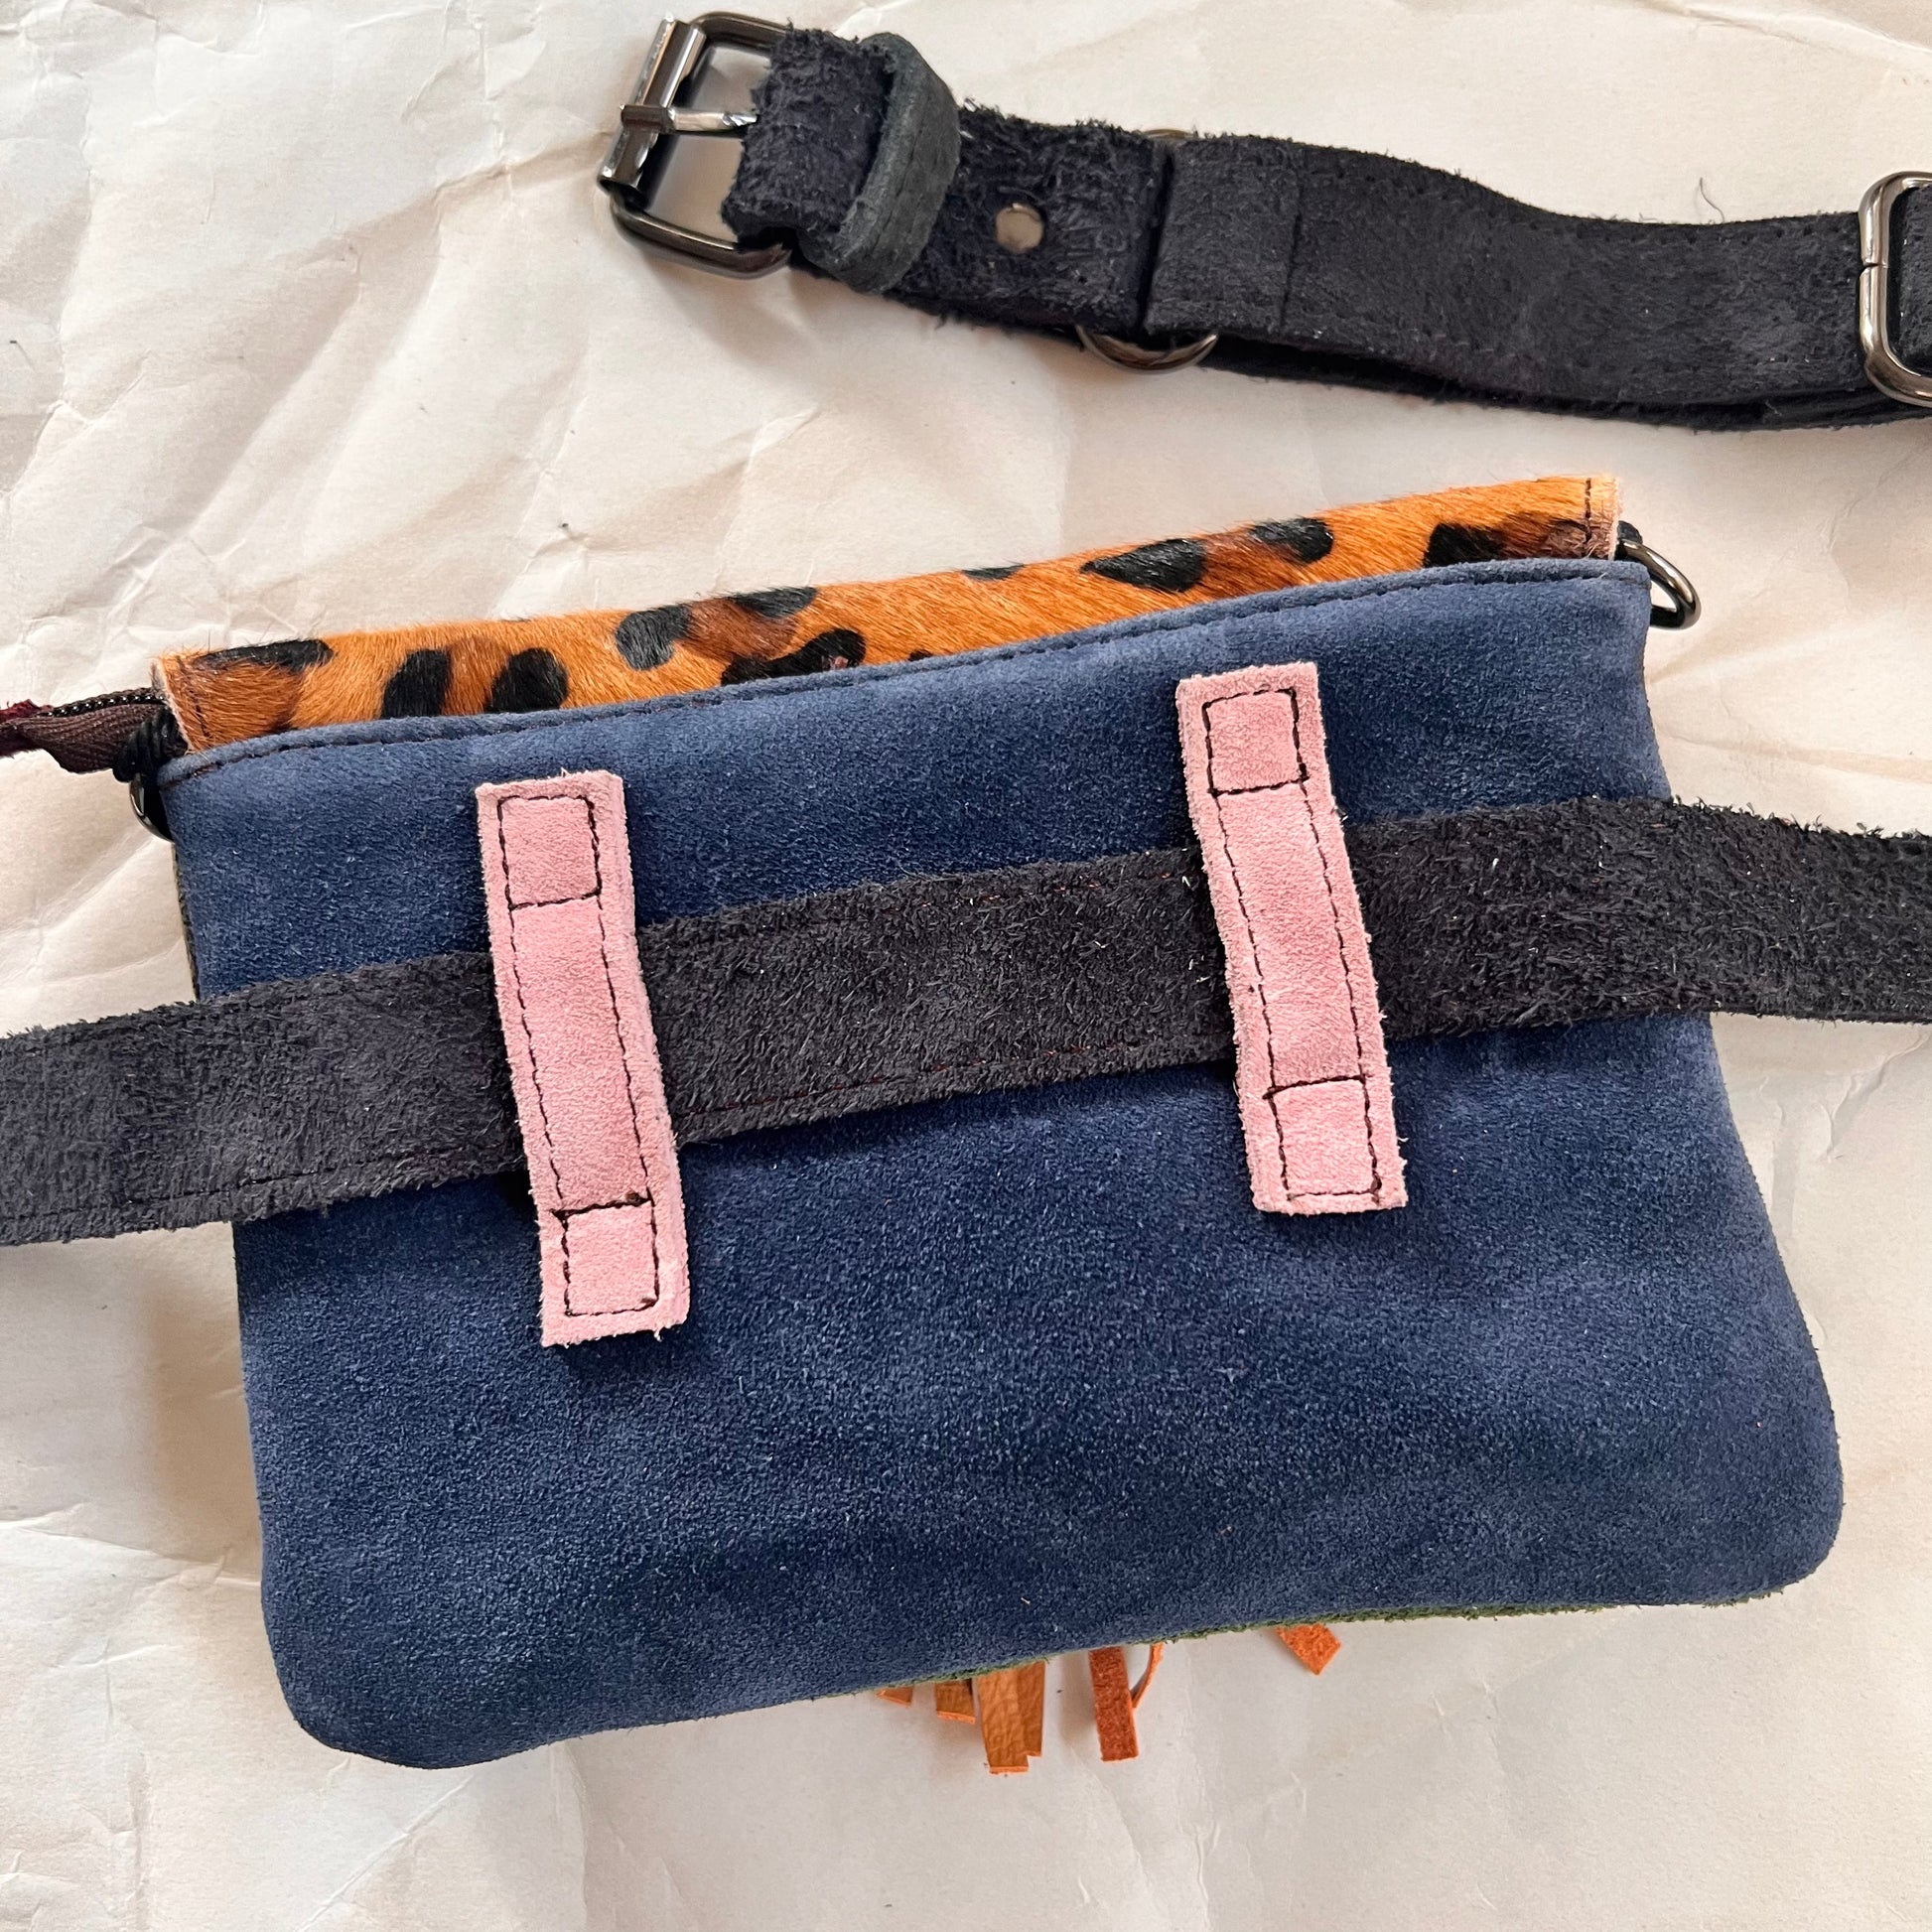 solid blue back of bag with pink loops holding grey belt.